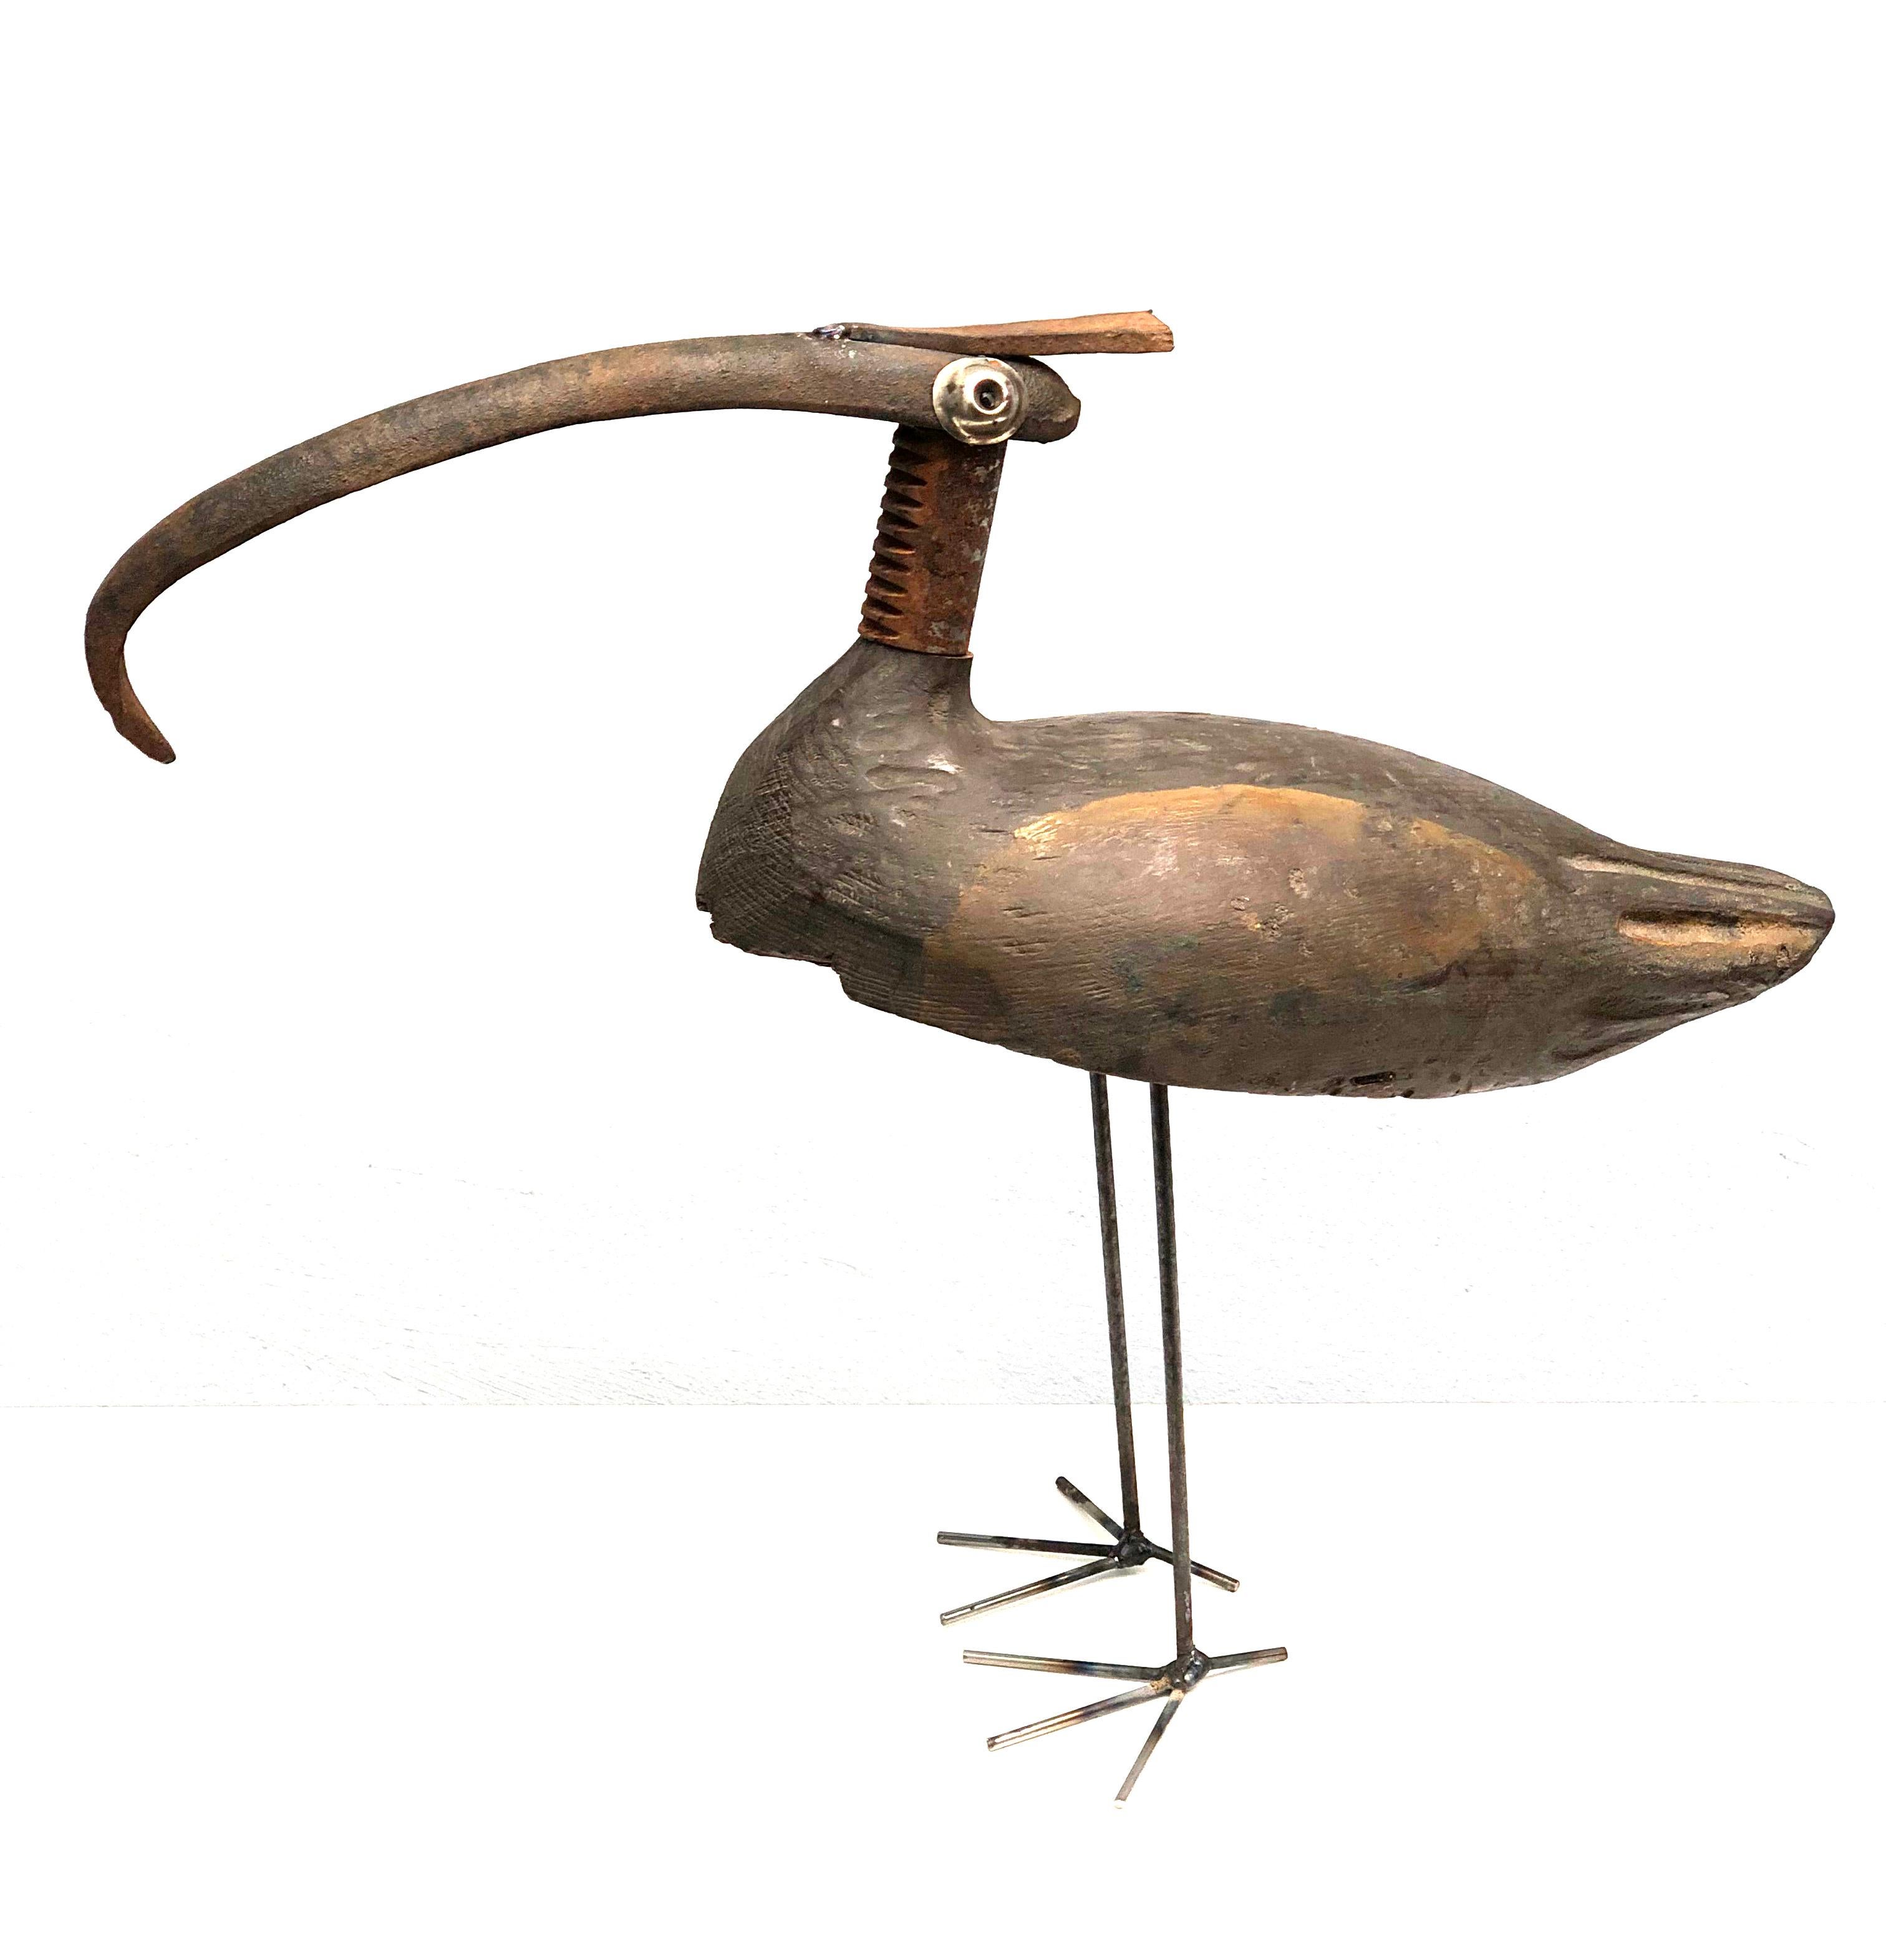 Miquel Aparici Figurative Sculpture - Pájaro Picudo - 21st Cent, Contemporary Sculpture, Figurative, Recycled Objects